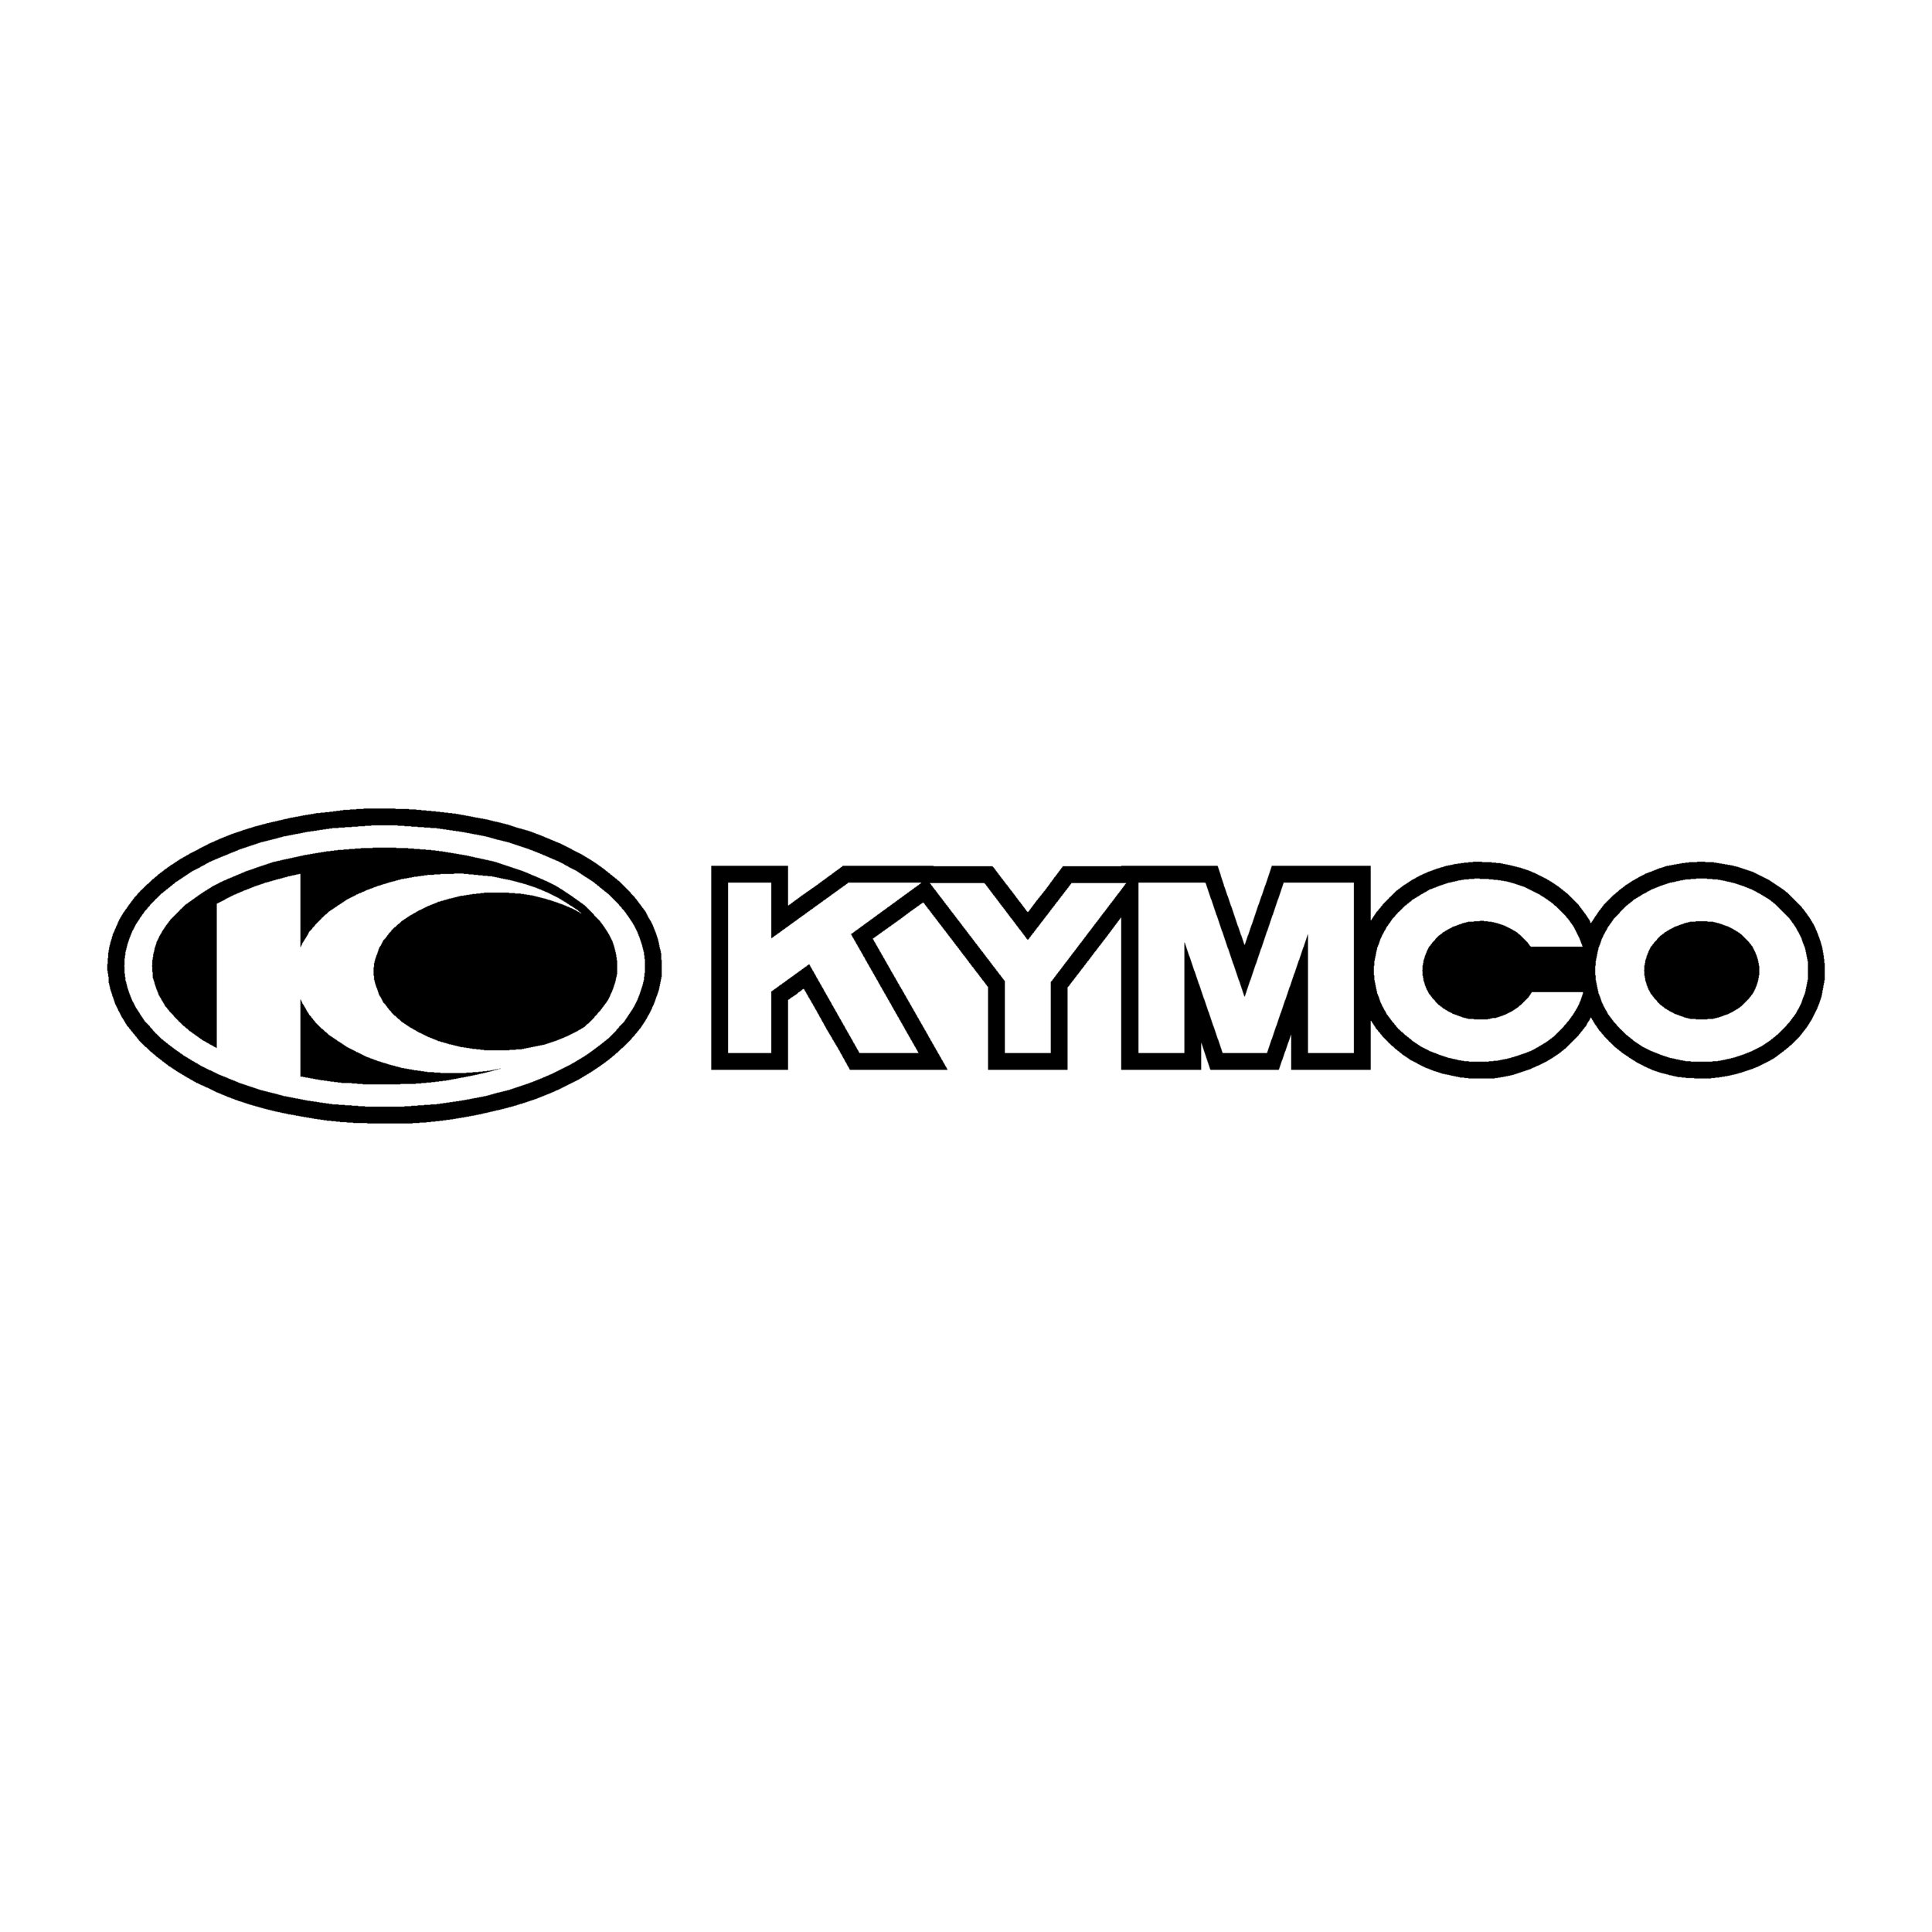 sticker kymco ref 2 tuning audio sonorisation car auto moto camion competition deco rallye autocollant